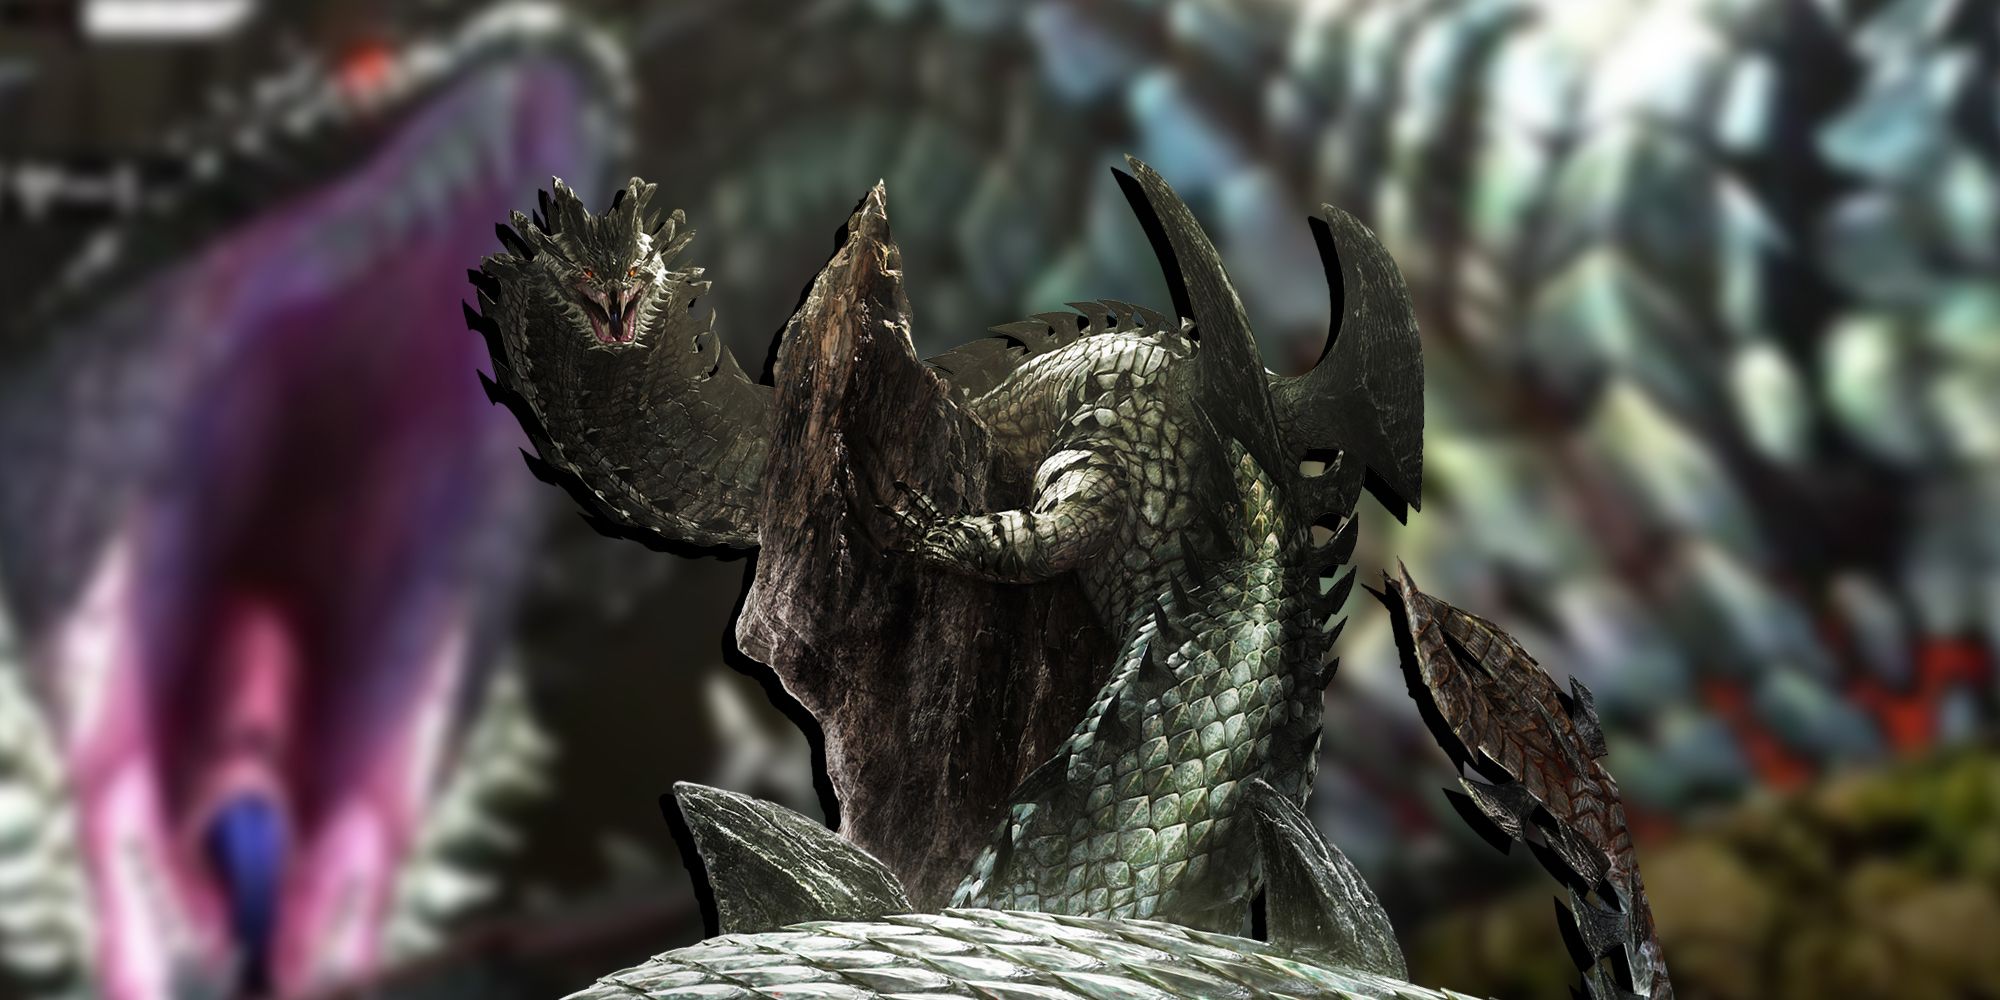 PNG Of Dalamadur Overlaid On Image Of Dalamadur Screaming At The Player In Monster Hunter 4